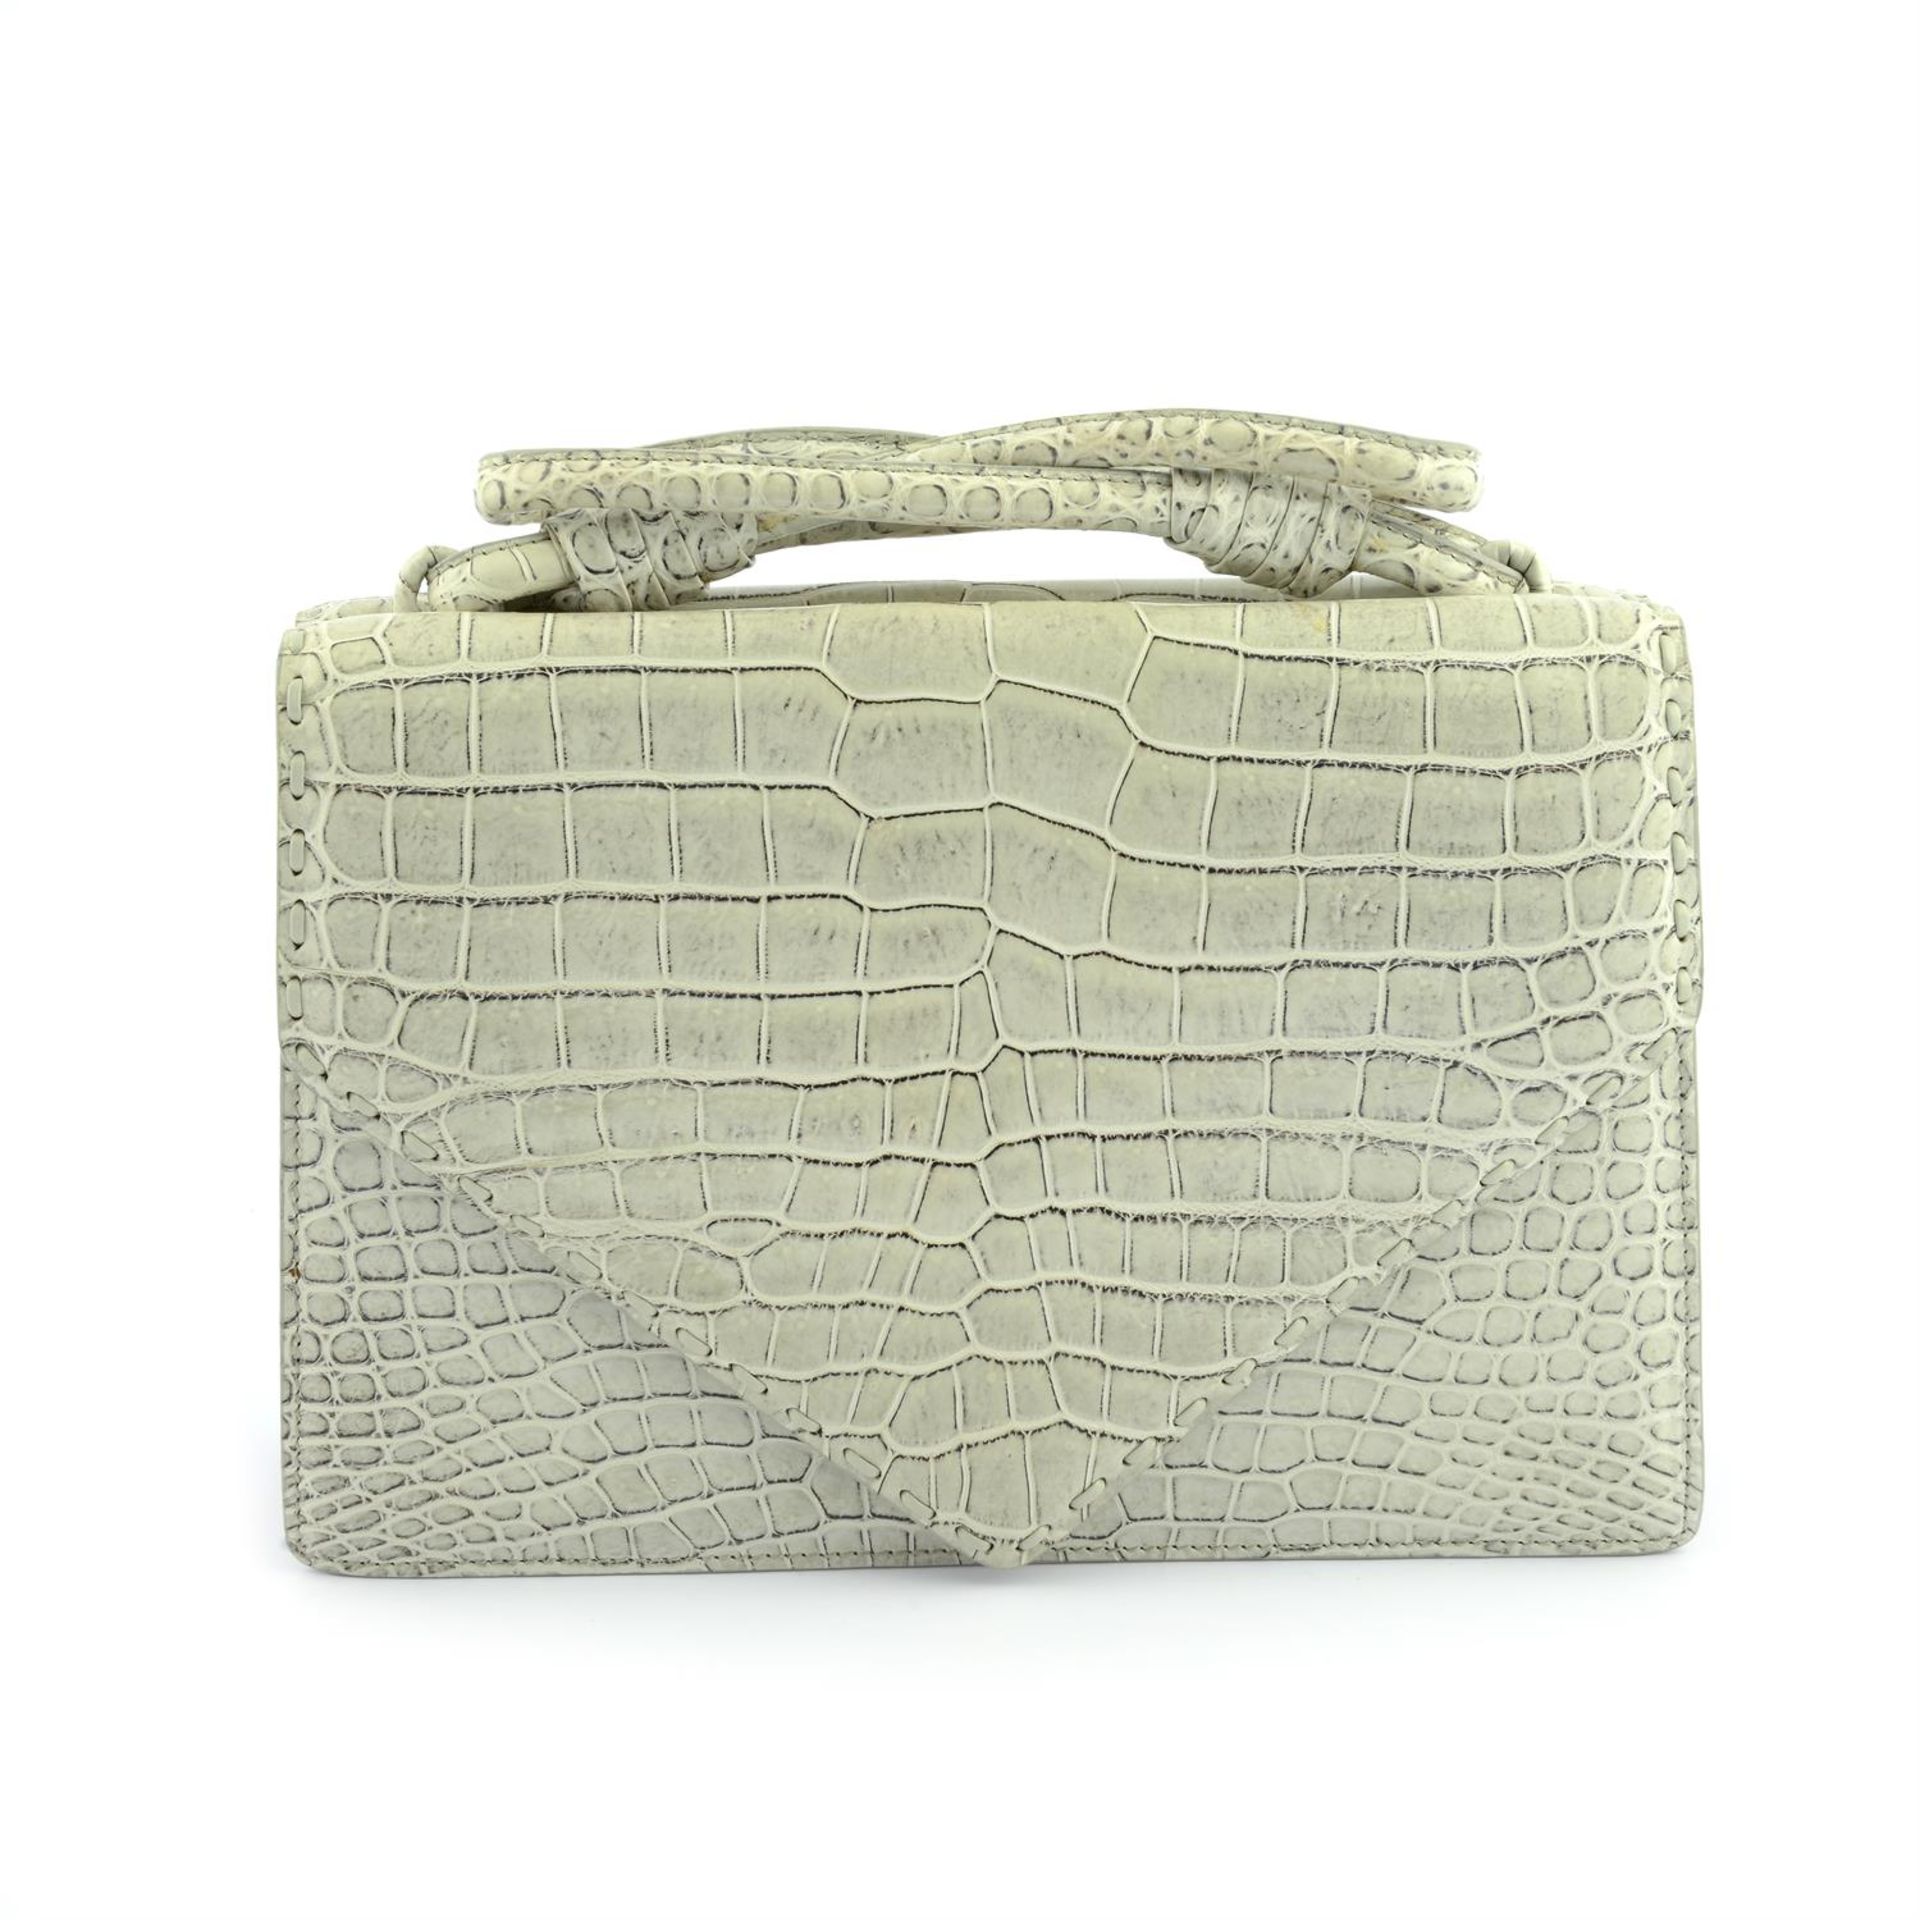 BOTTEGA VENETA - a small light beige Chene Crocodile leather Piano handbag. - Bild 2 aus 4